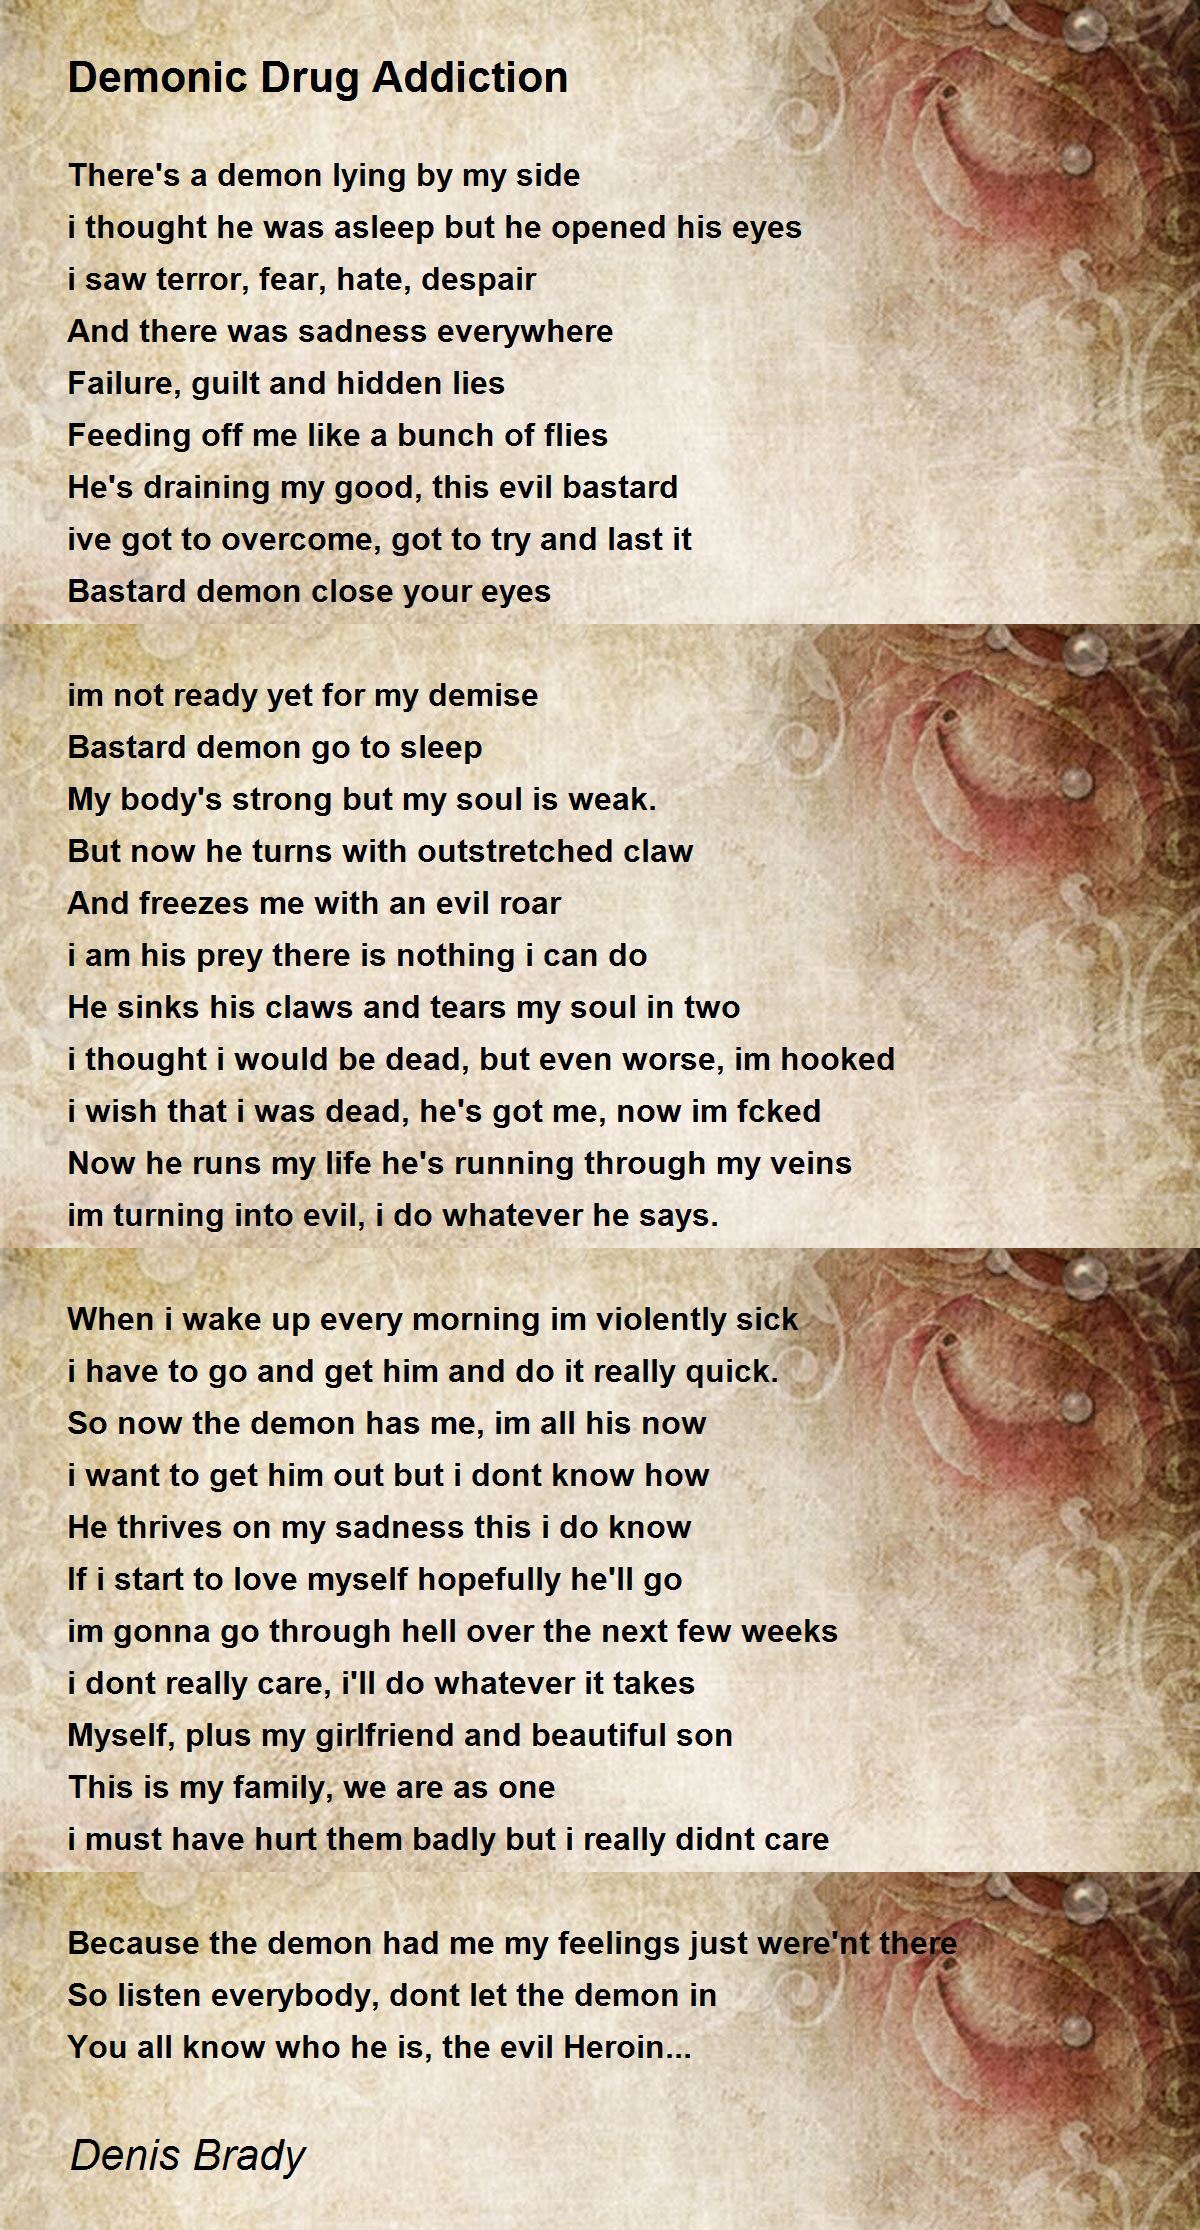 Demonic Drug Addiction Poem by Denis Brady - Poem Hunter